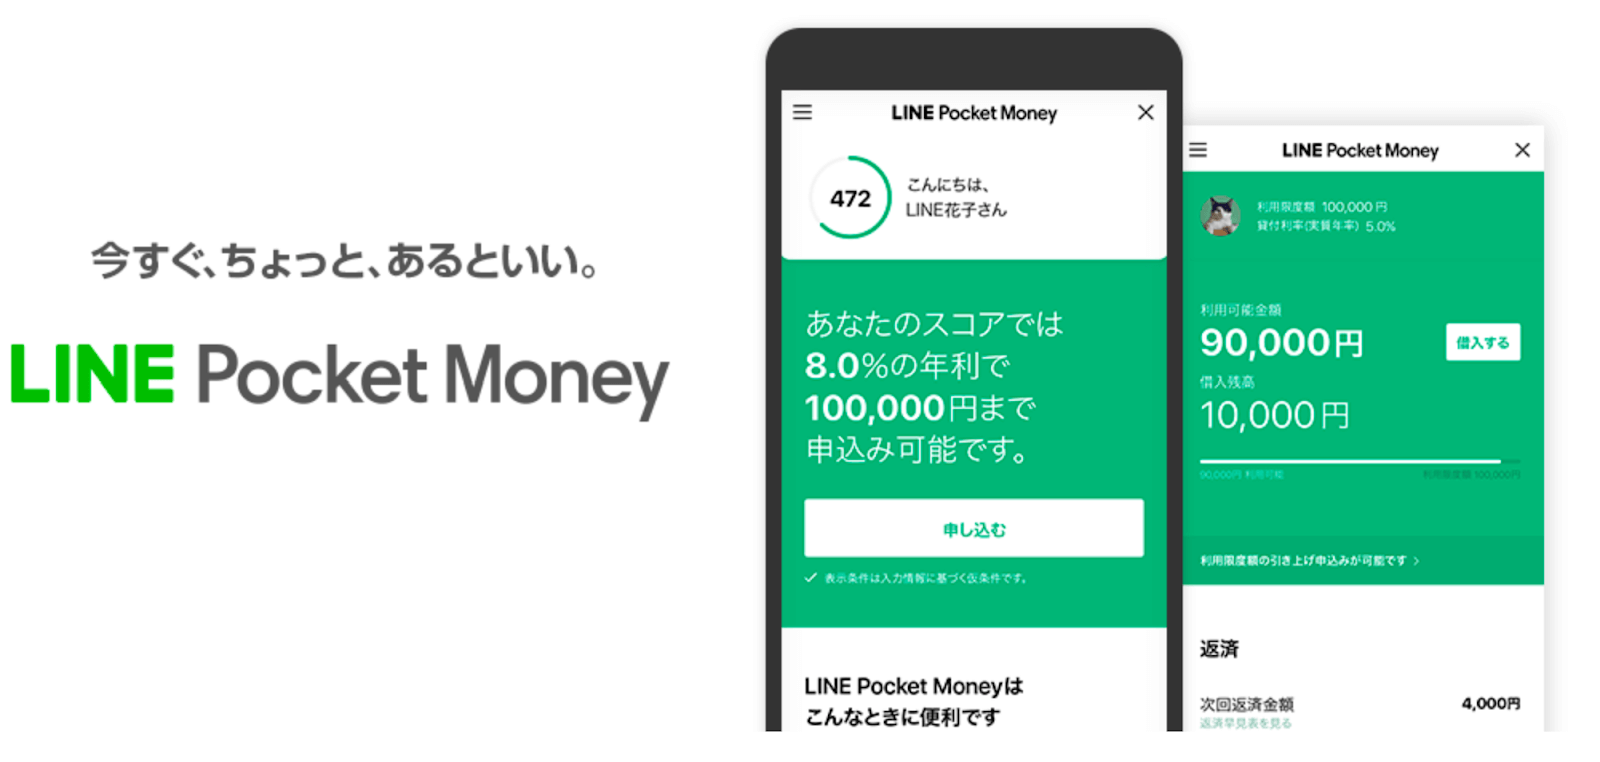 LINE Pocket Money